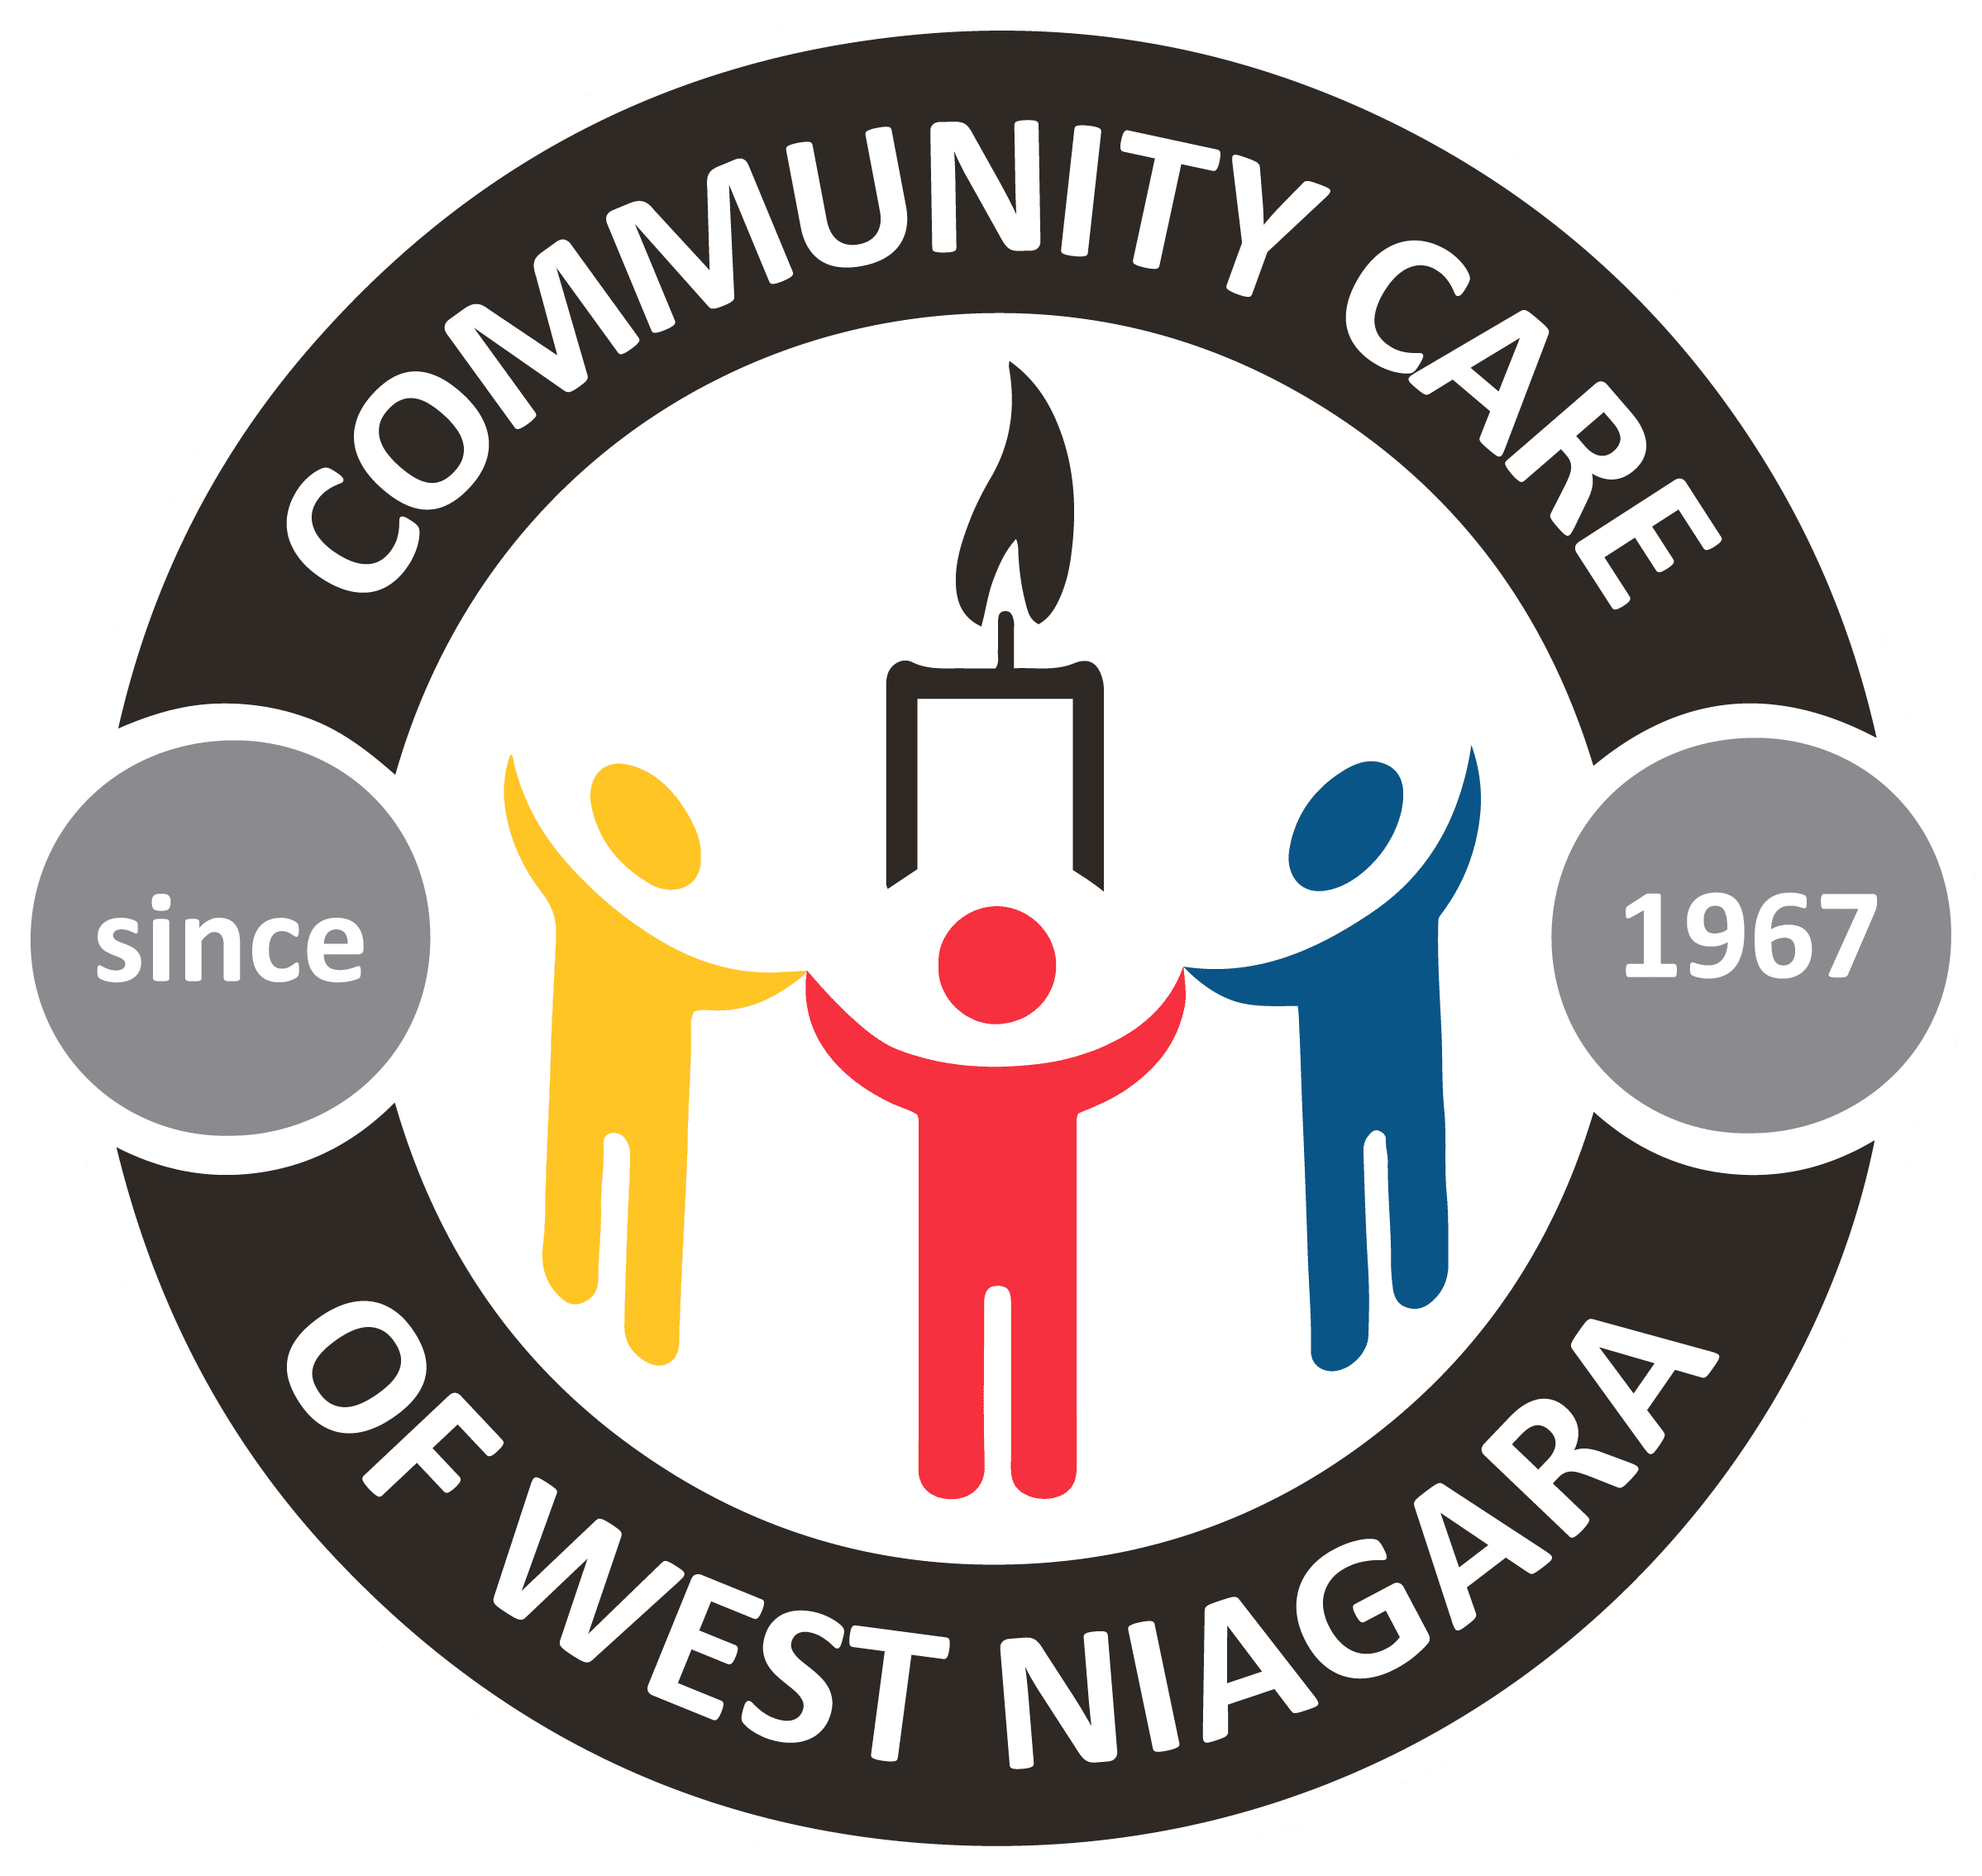 Community Care of West Niagara